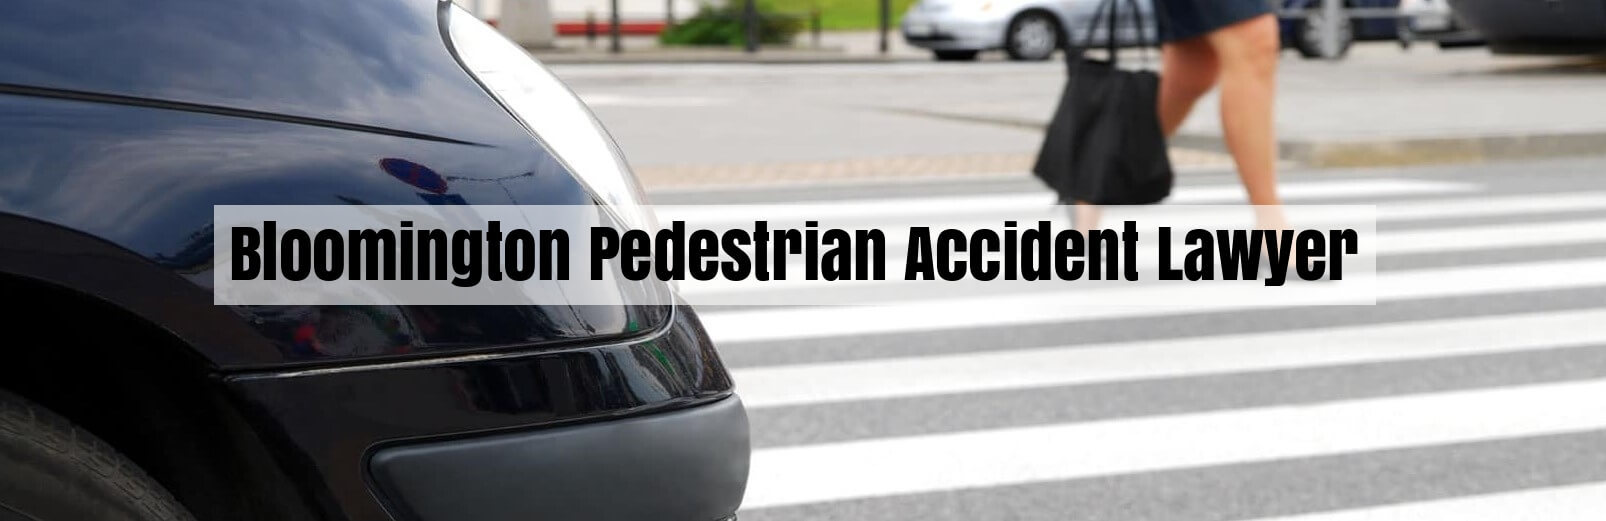 Bloomington Pedestrian Accident Lawyer